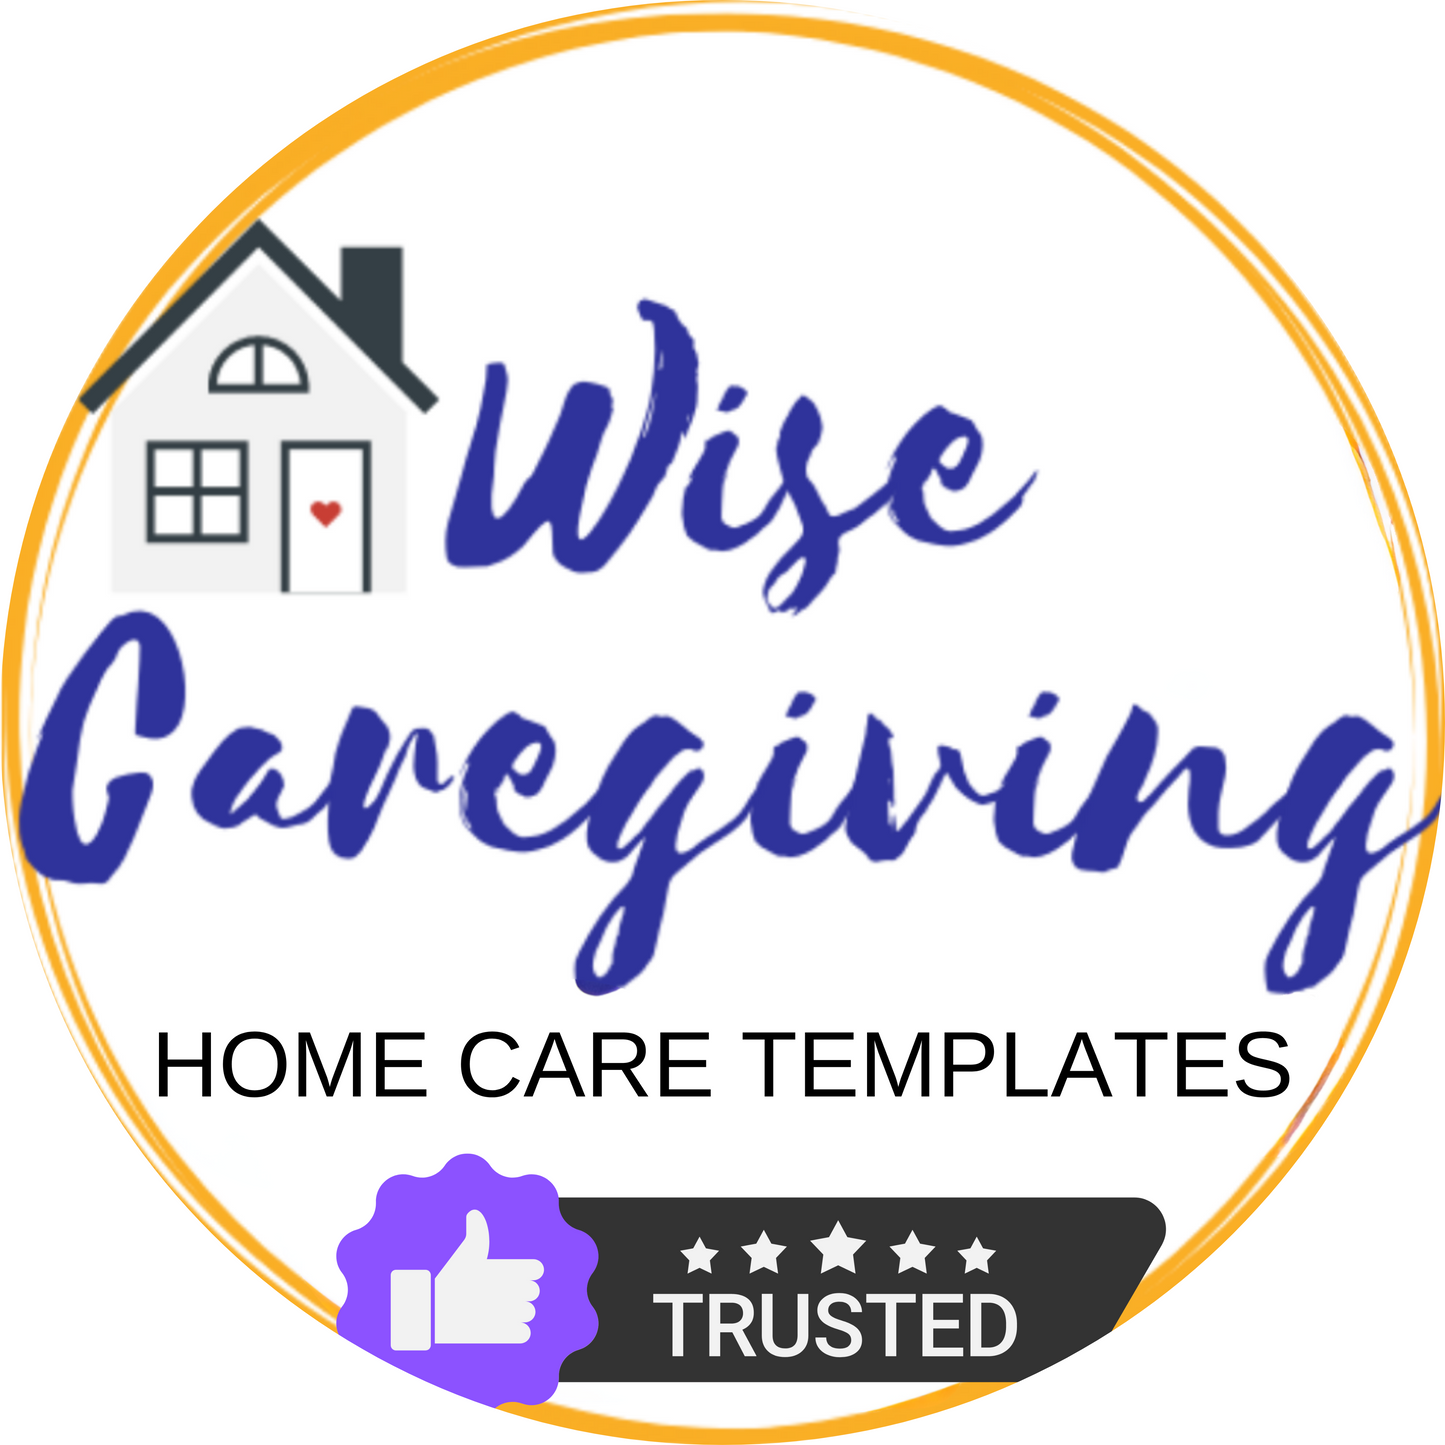 Caregiver Job Description Template